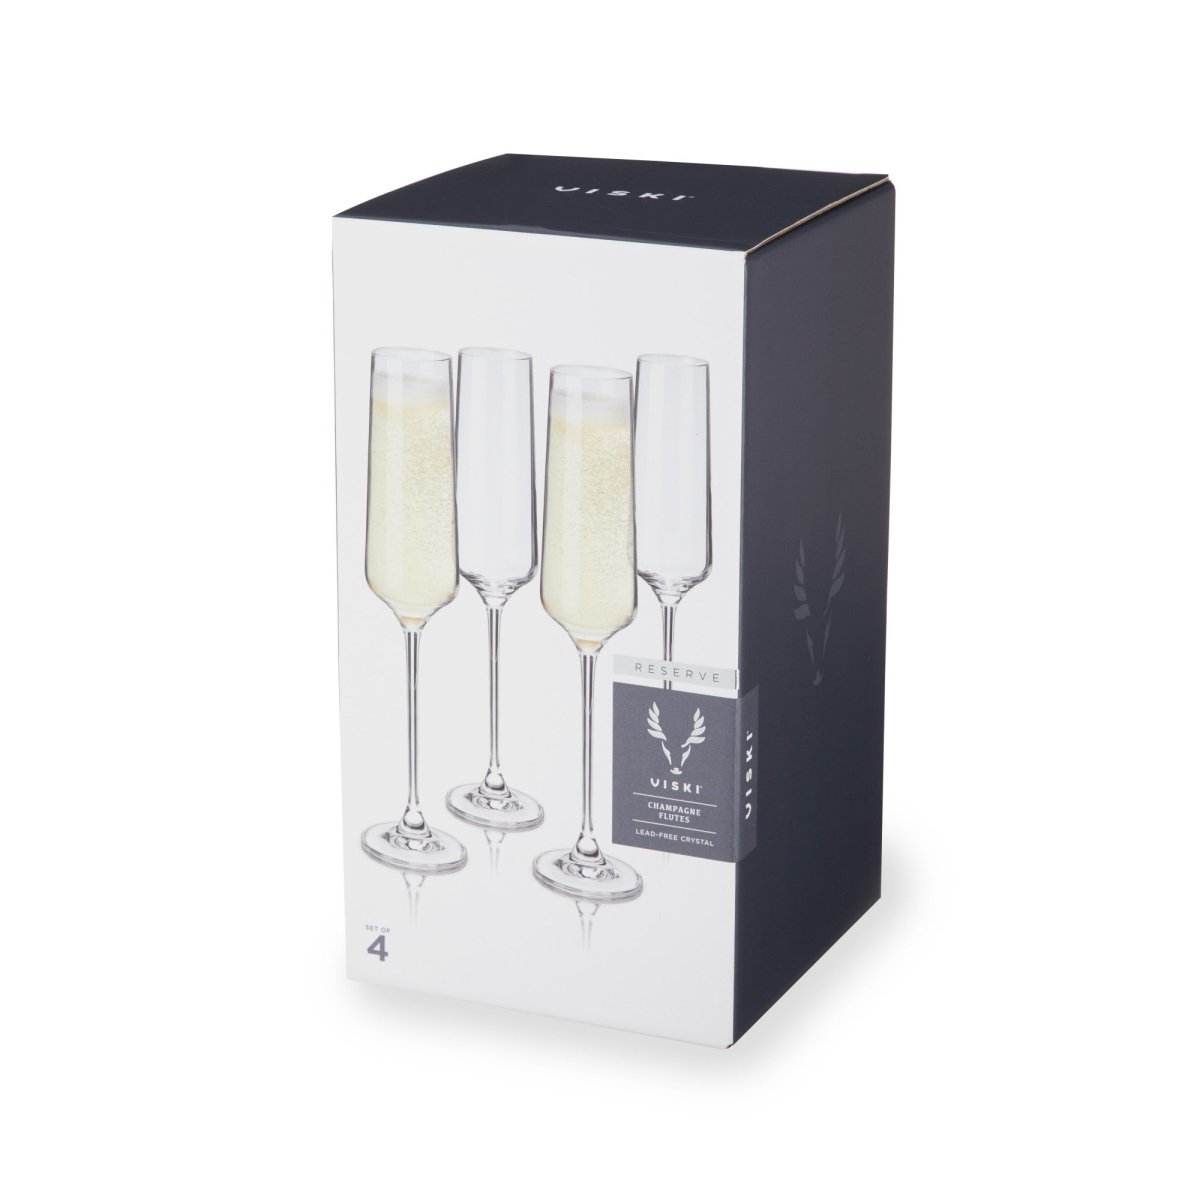 Ravenscroft Crystal.com, Classics Cuvee Champagne Flutes (Set of 4)